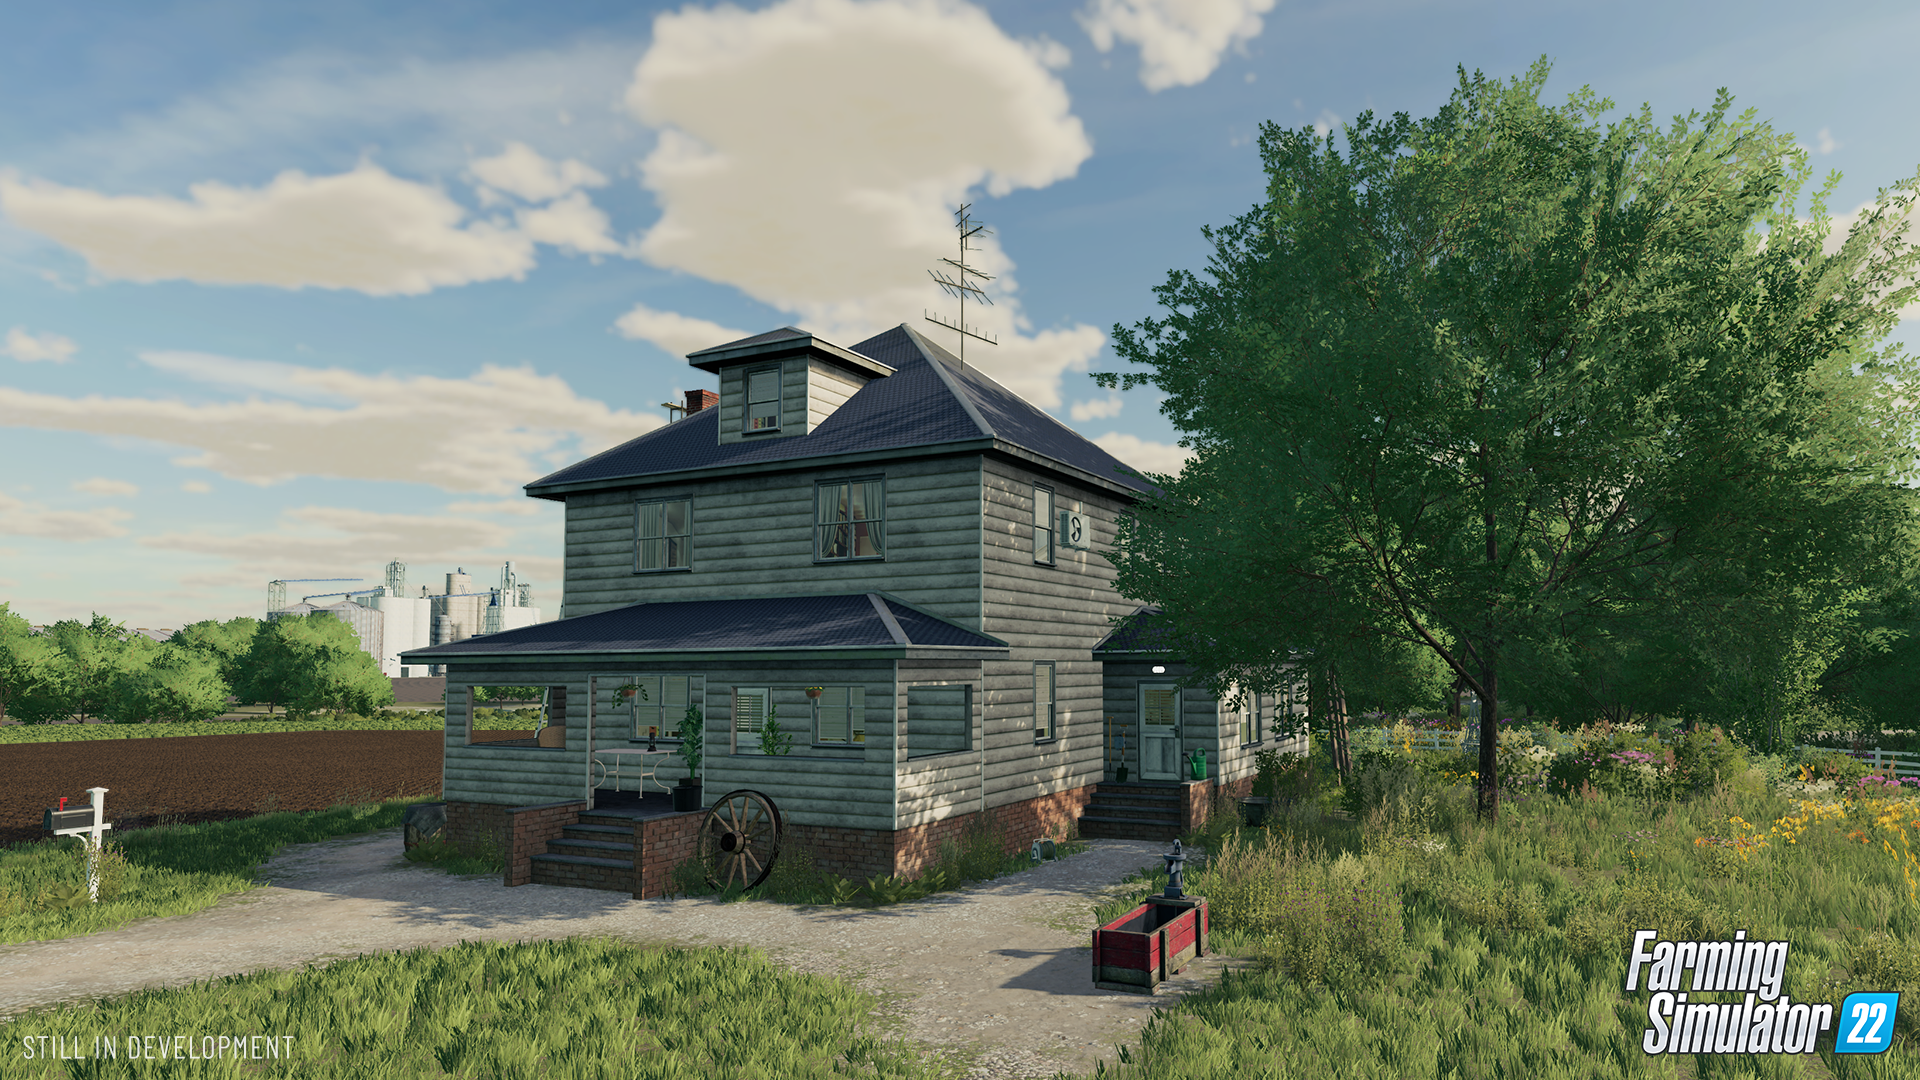 New Image Showcase The Seasonal Changes in Farming Simulator 22